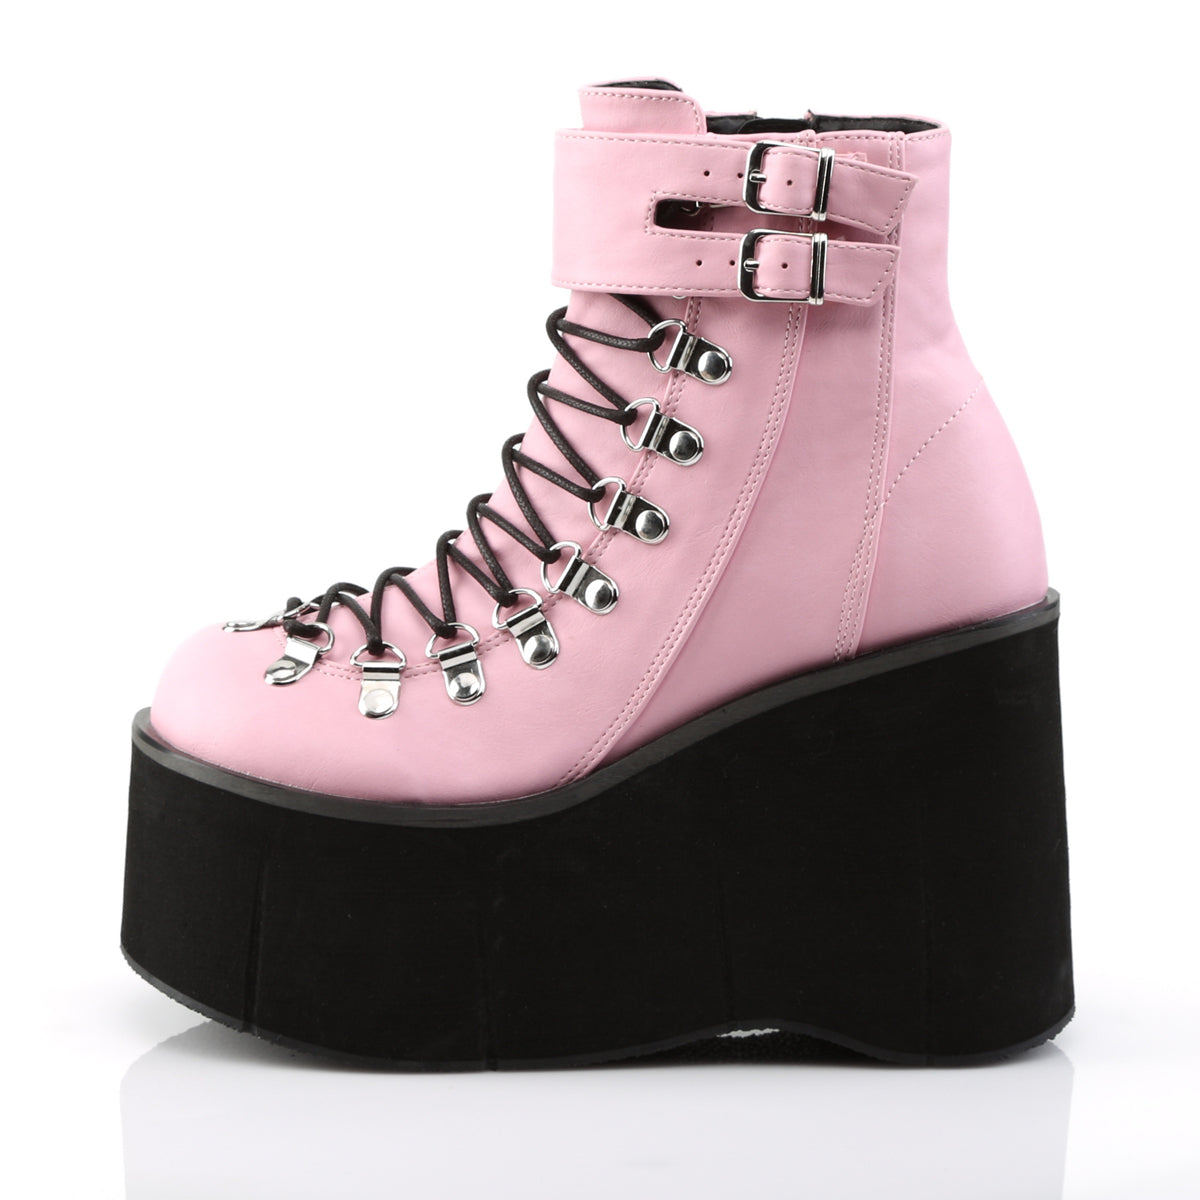 KERA-21 Demonia B Pink Vegan Leather Women's Ankle Boots [Demonia Cult Alternative Footwear]